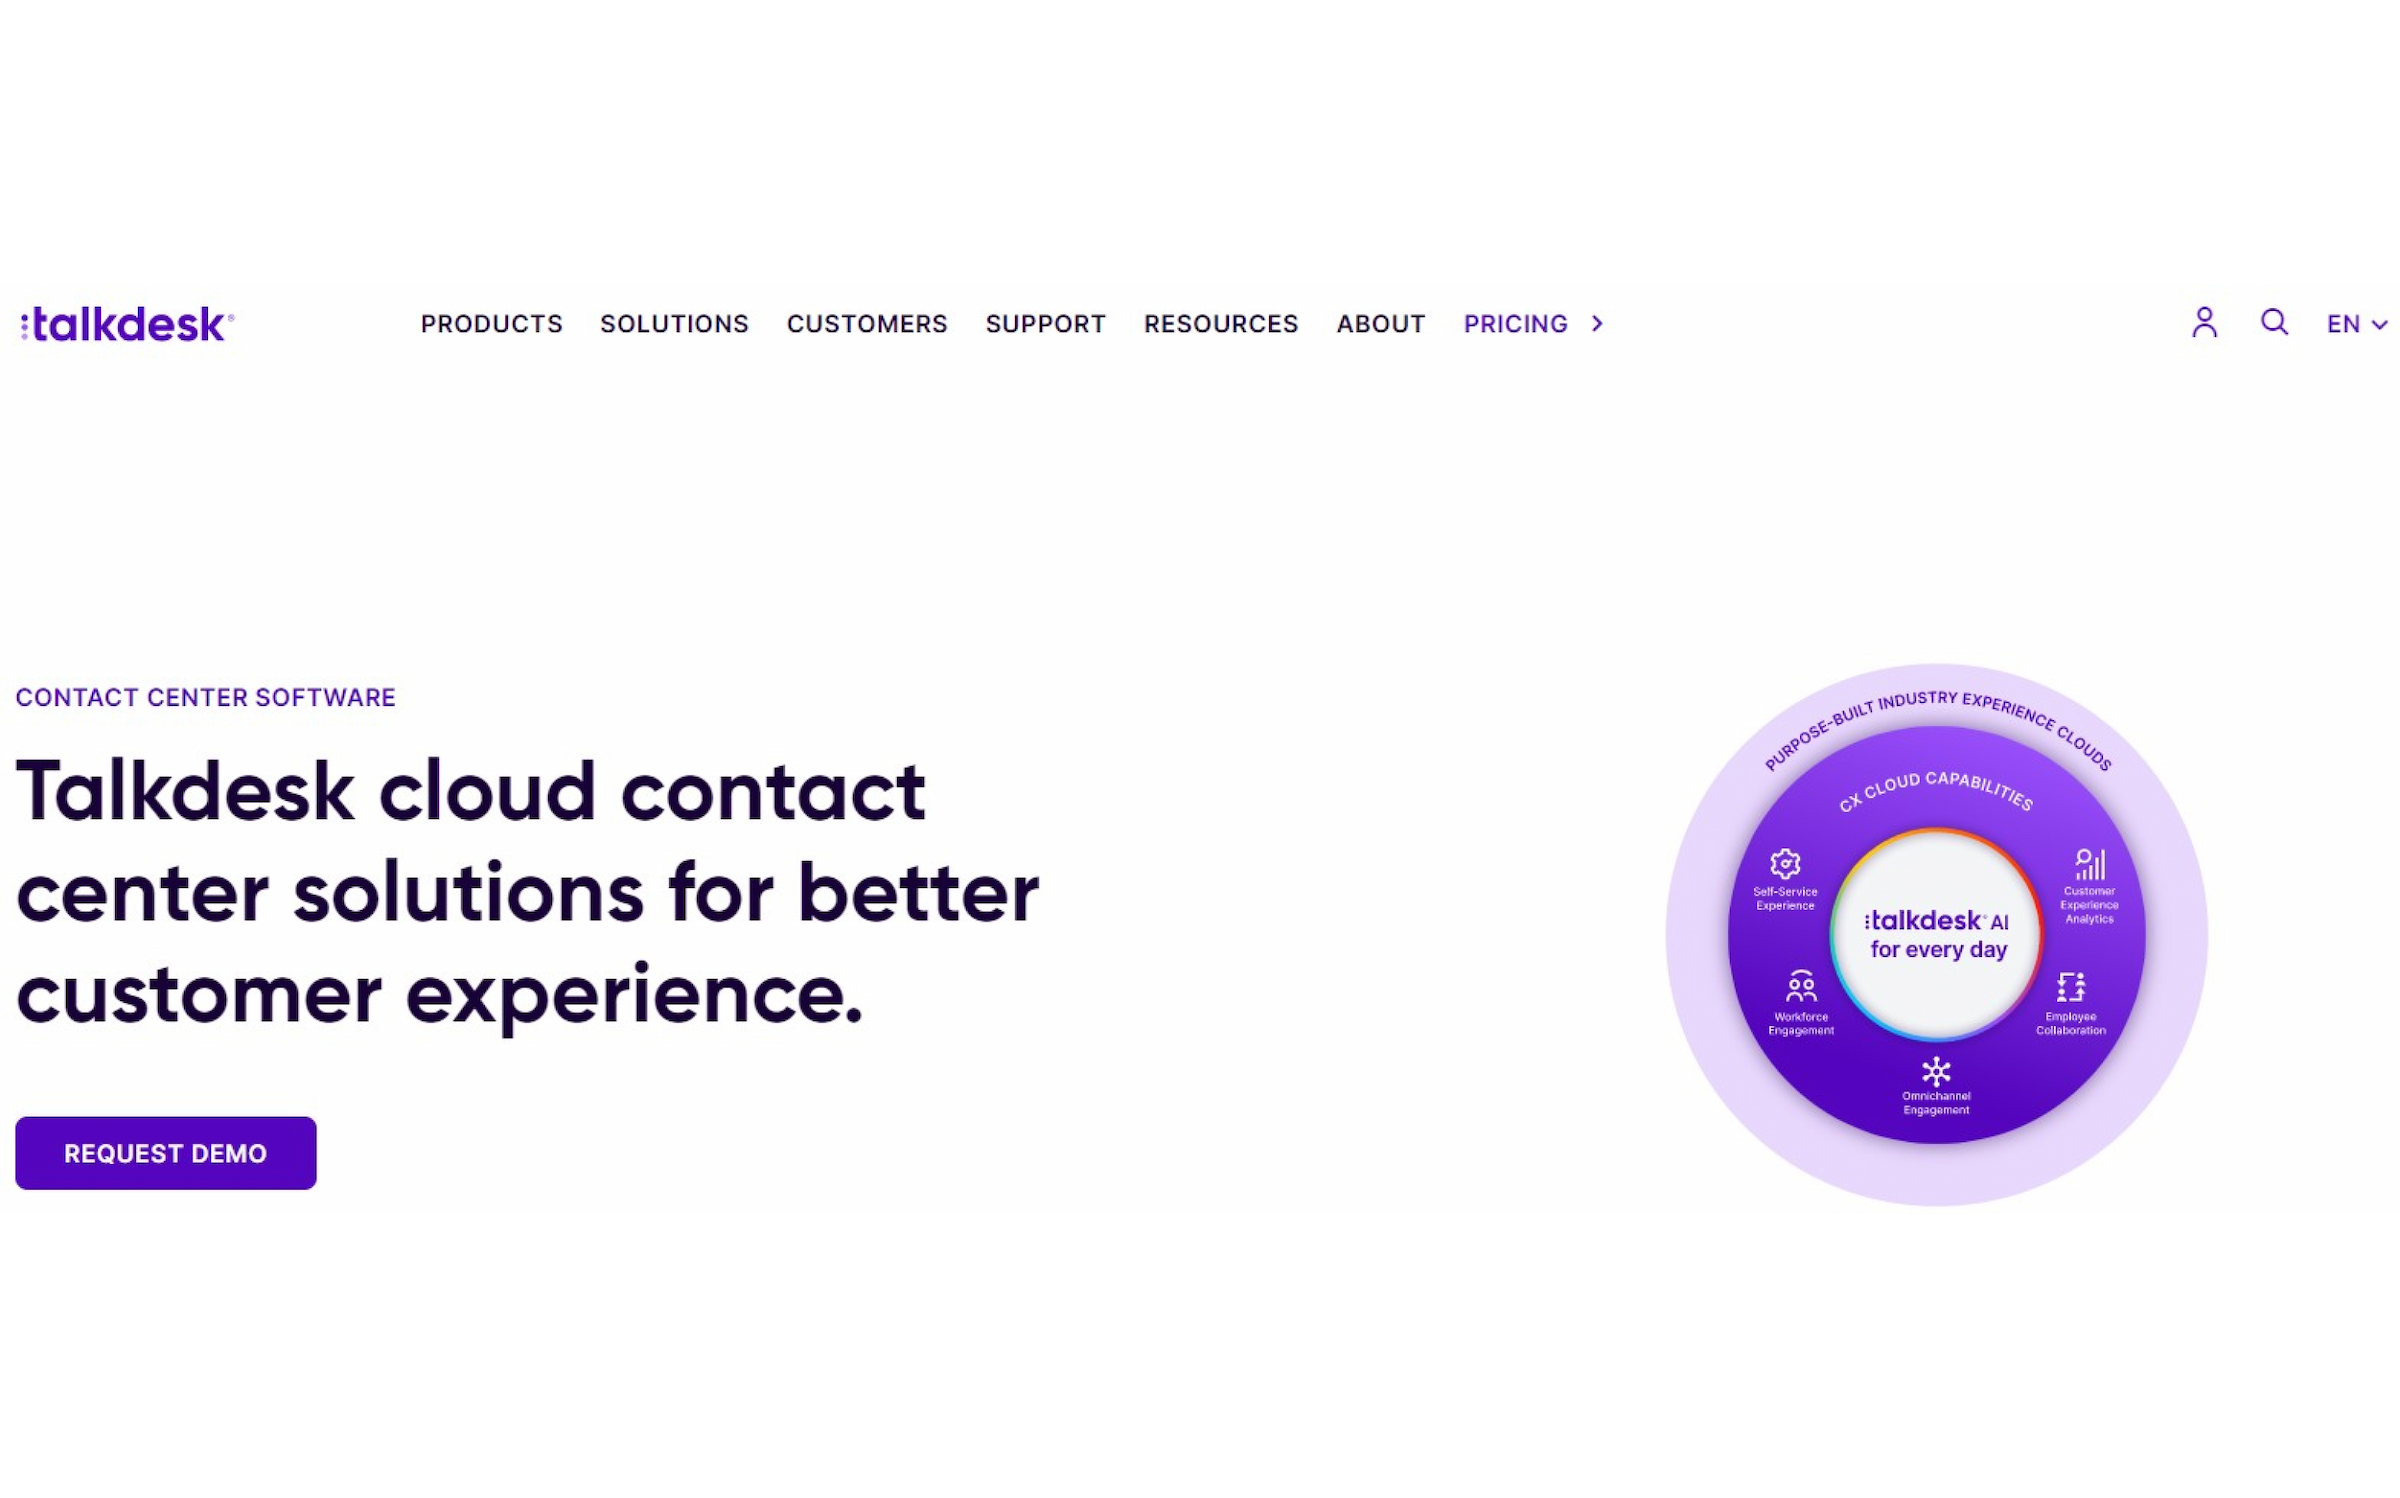 Talkdesk cloud contact center solutions